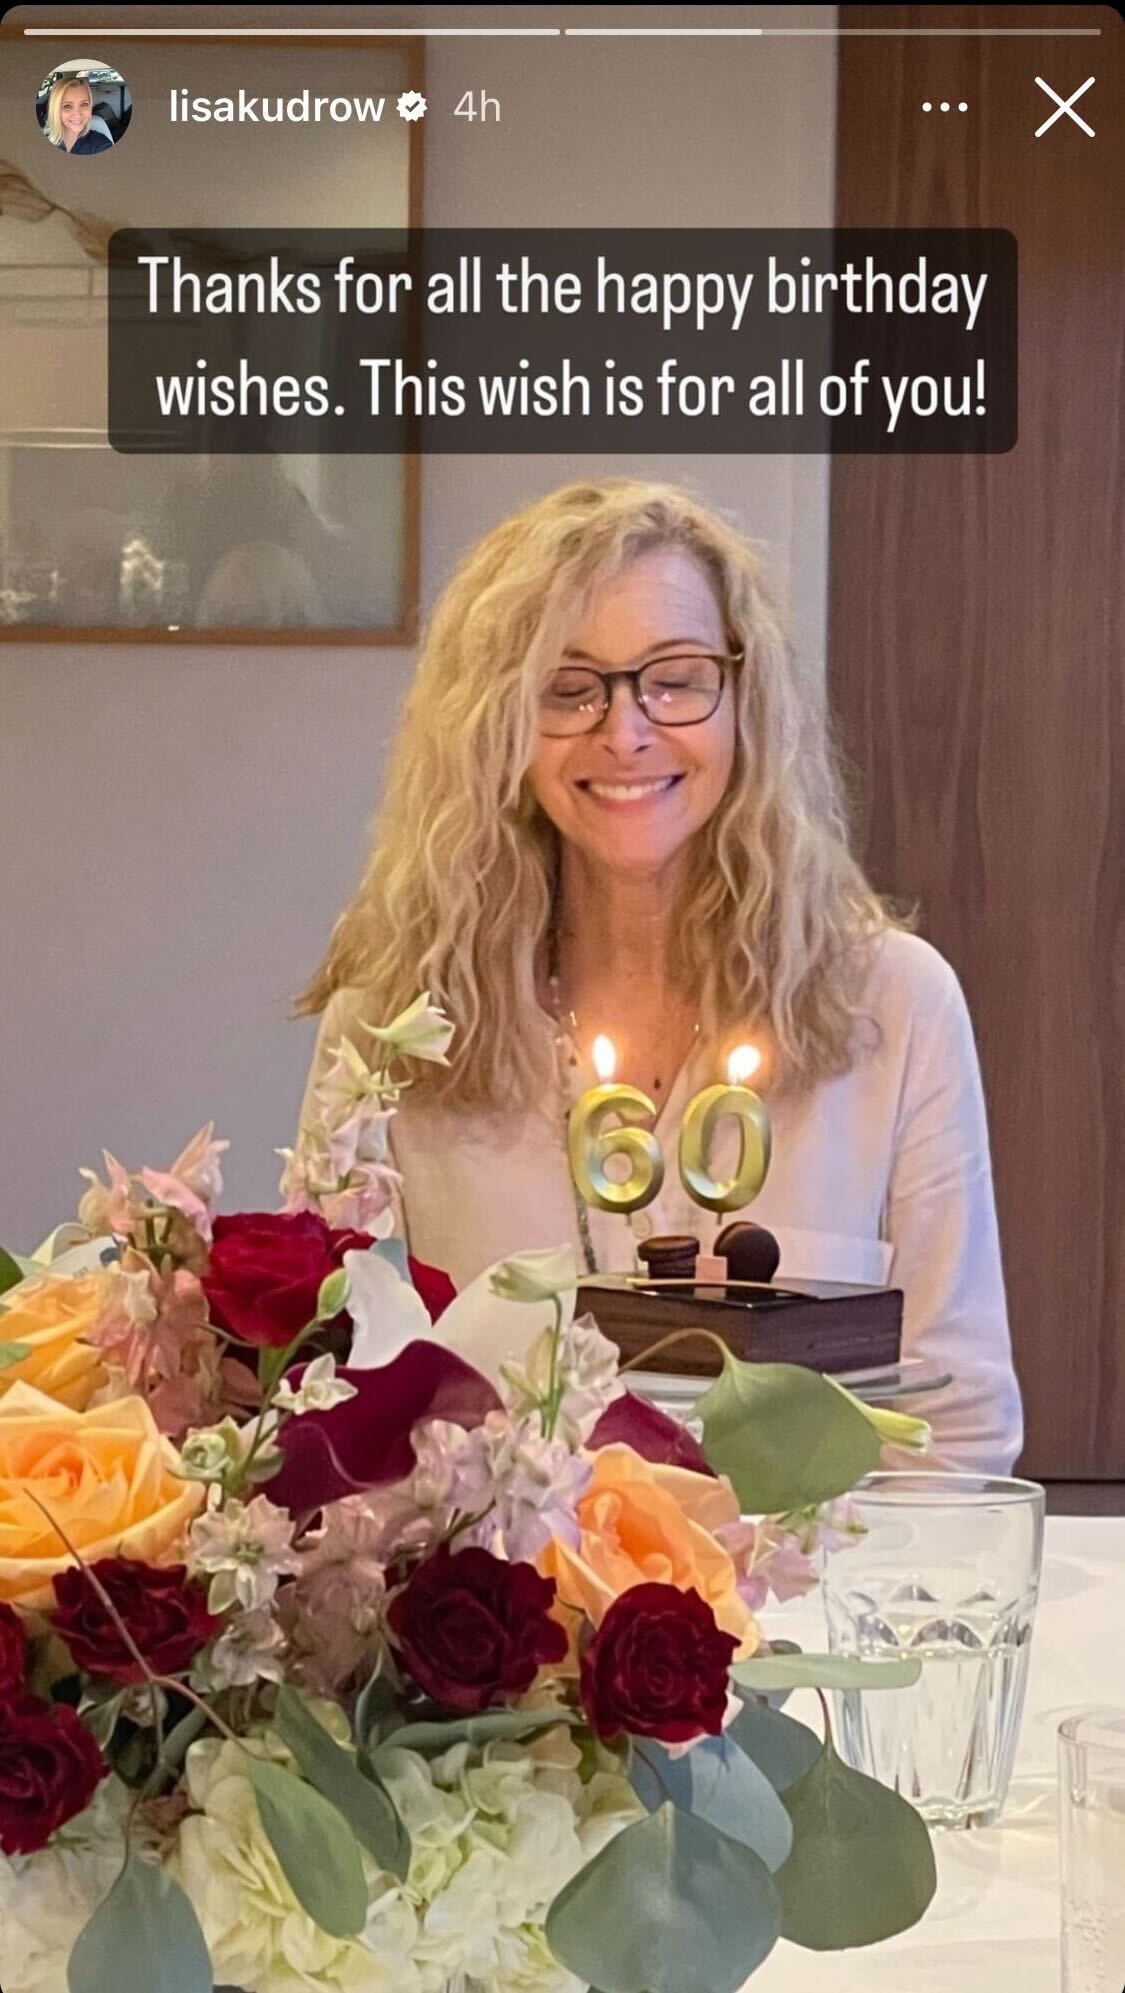 Lisa Kudrow celebrates her 60th birthday